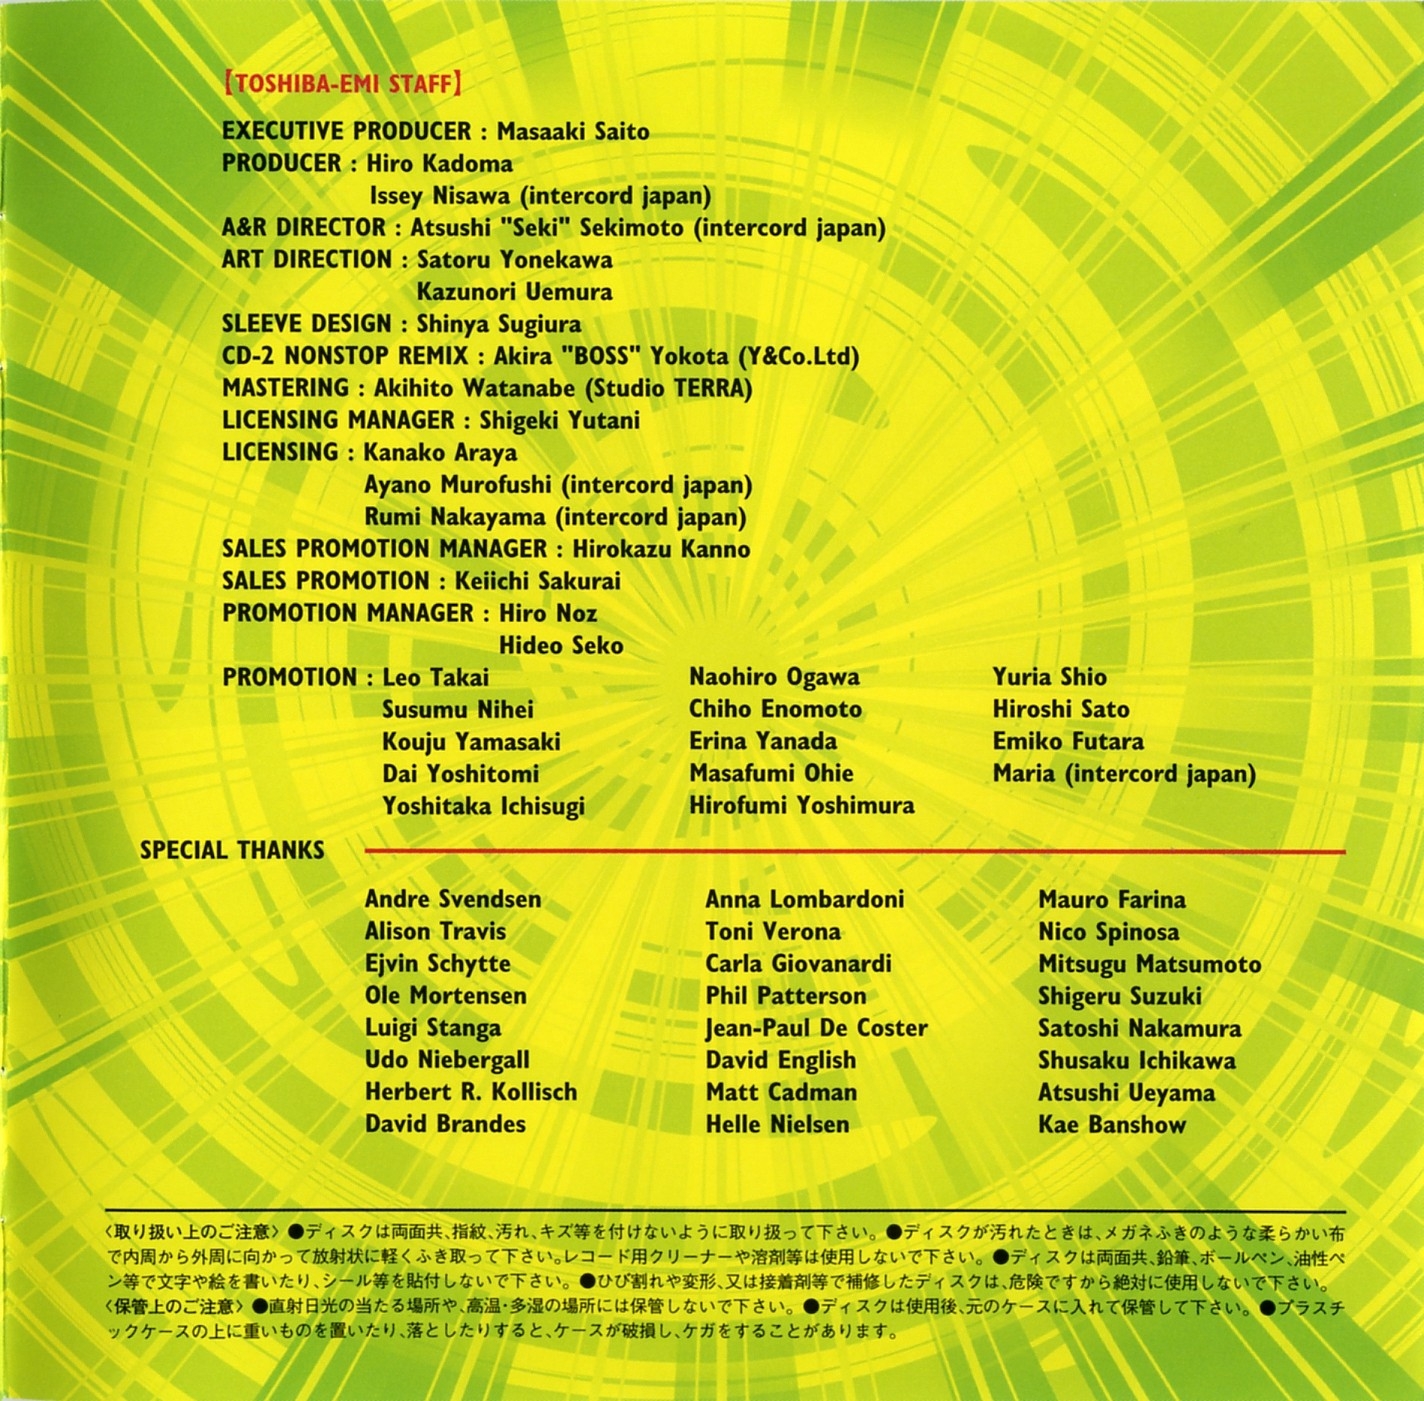 Dance Dance Revolution 5thMIX ORIGINAL SOUNDTRACK (2001) MP3 